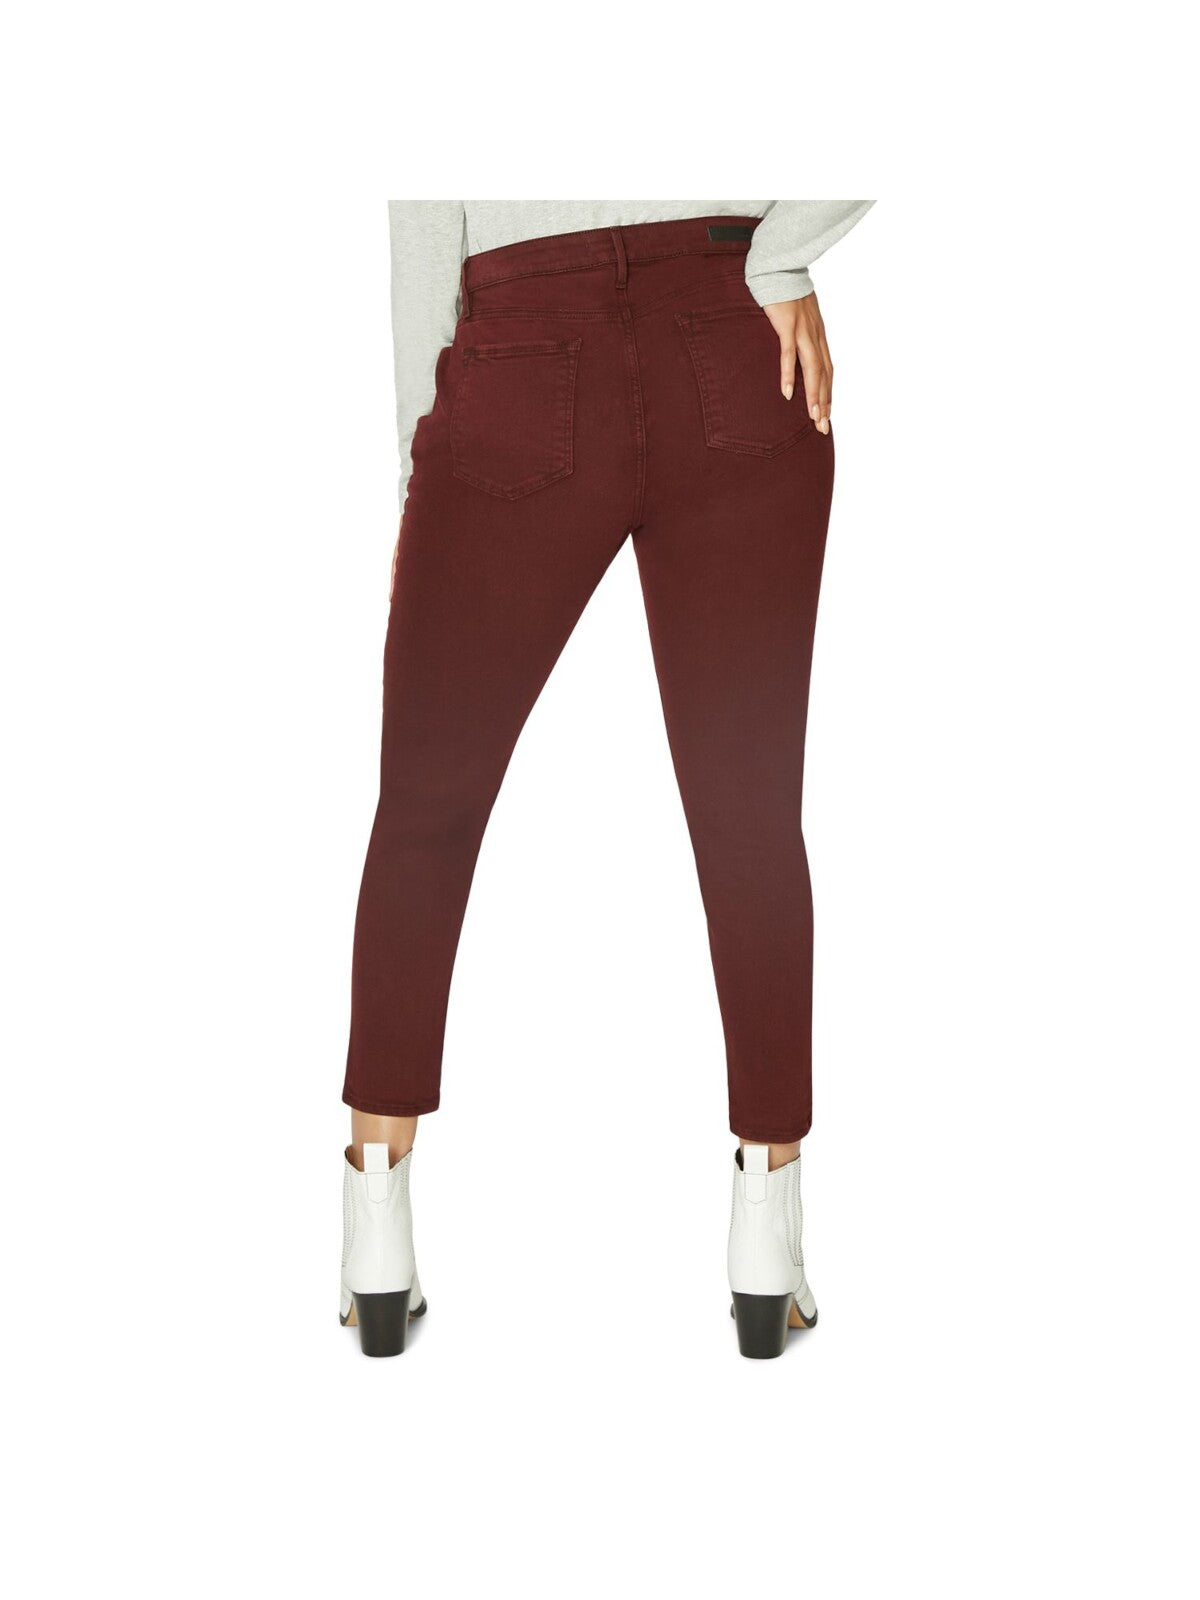 SANCTUARY DENIM Womens Burgundy Zippered Pocketed Ankle Skinny High Waist Jeans Plus 16W